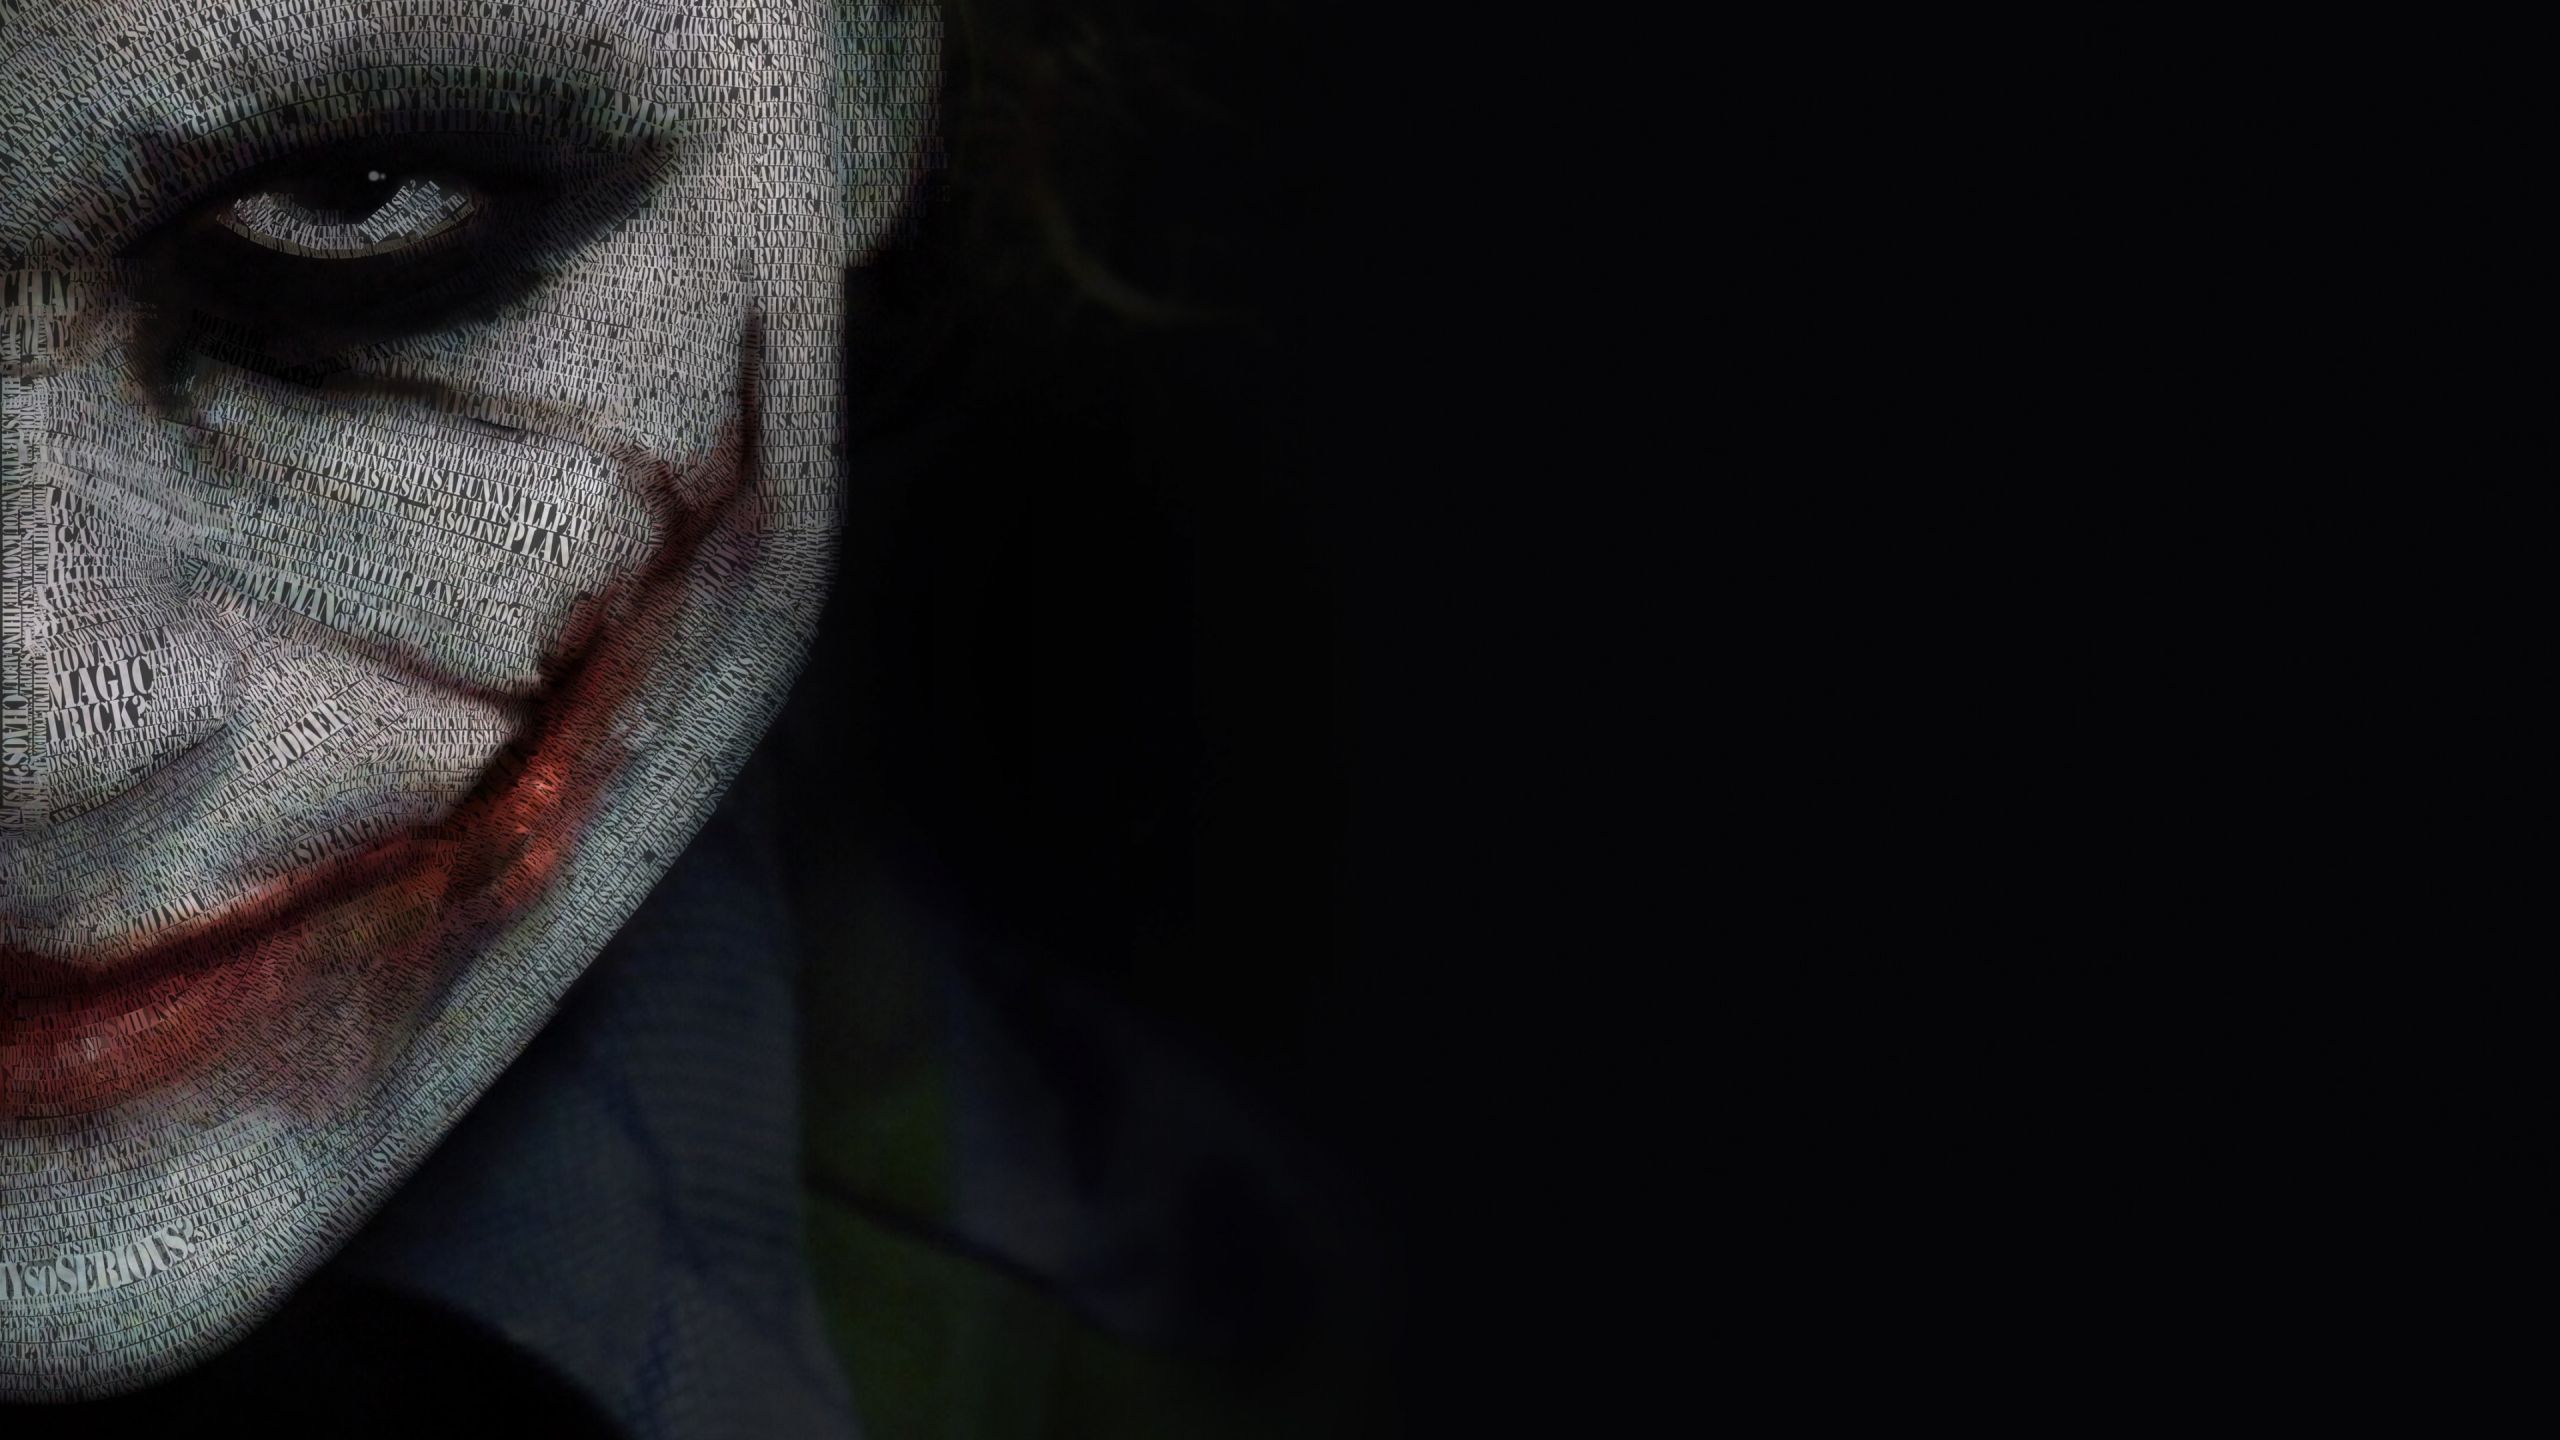 The Joker Typeface Portrait wallpaper in 2560x1440 resolution